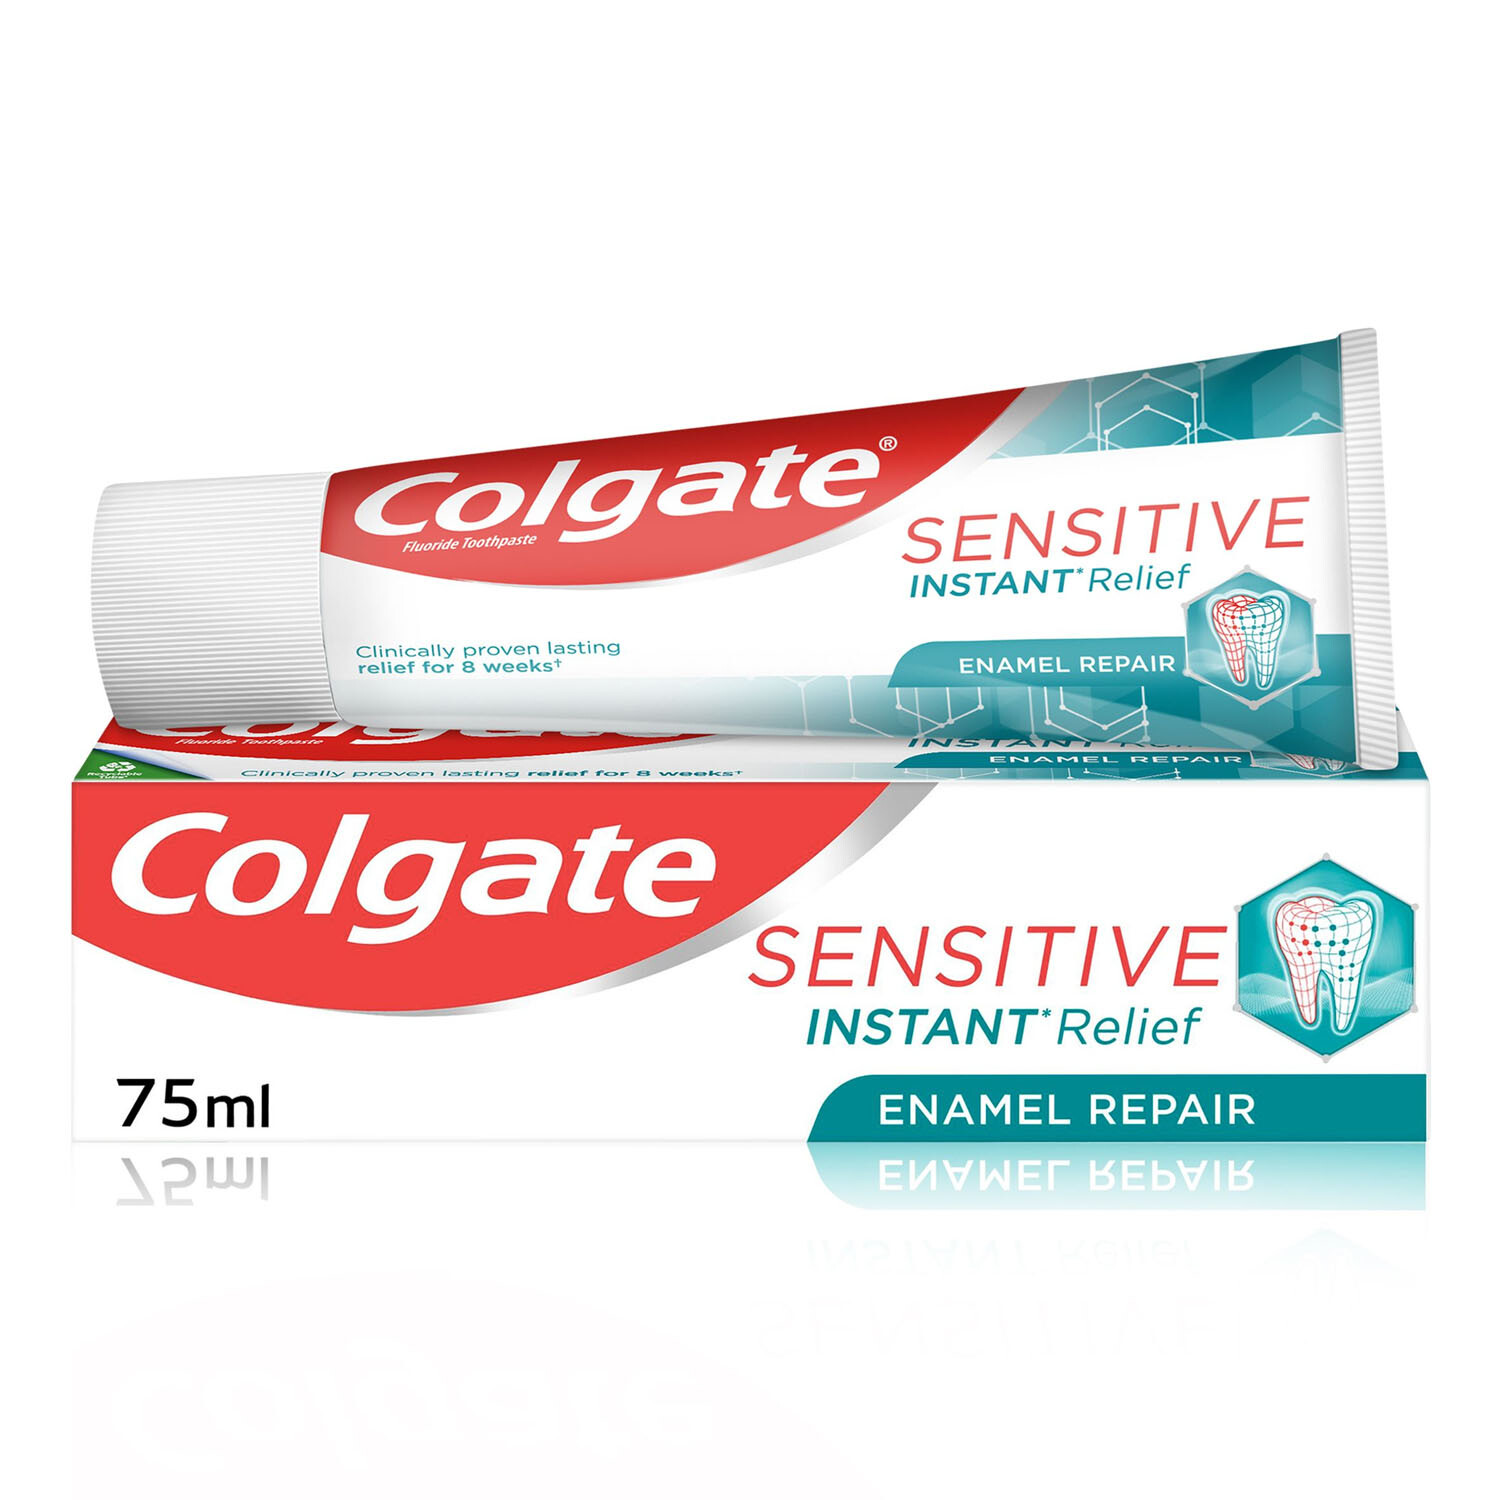 Colgate Sensitive Instant Relief Enamel Repair Toothpaste Image 2